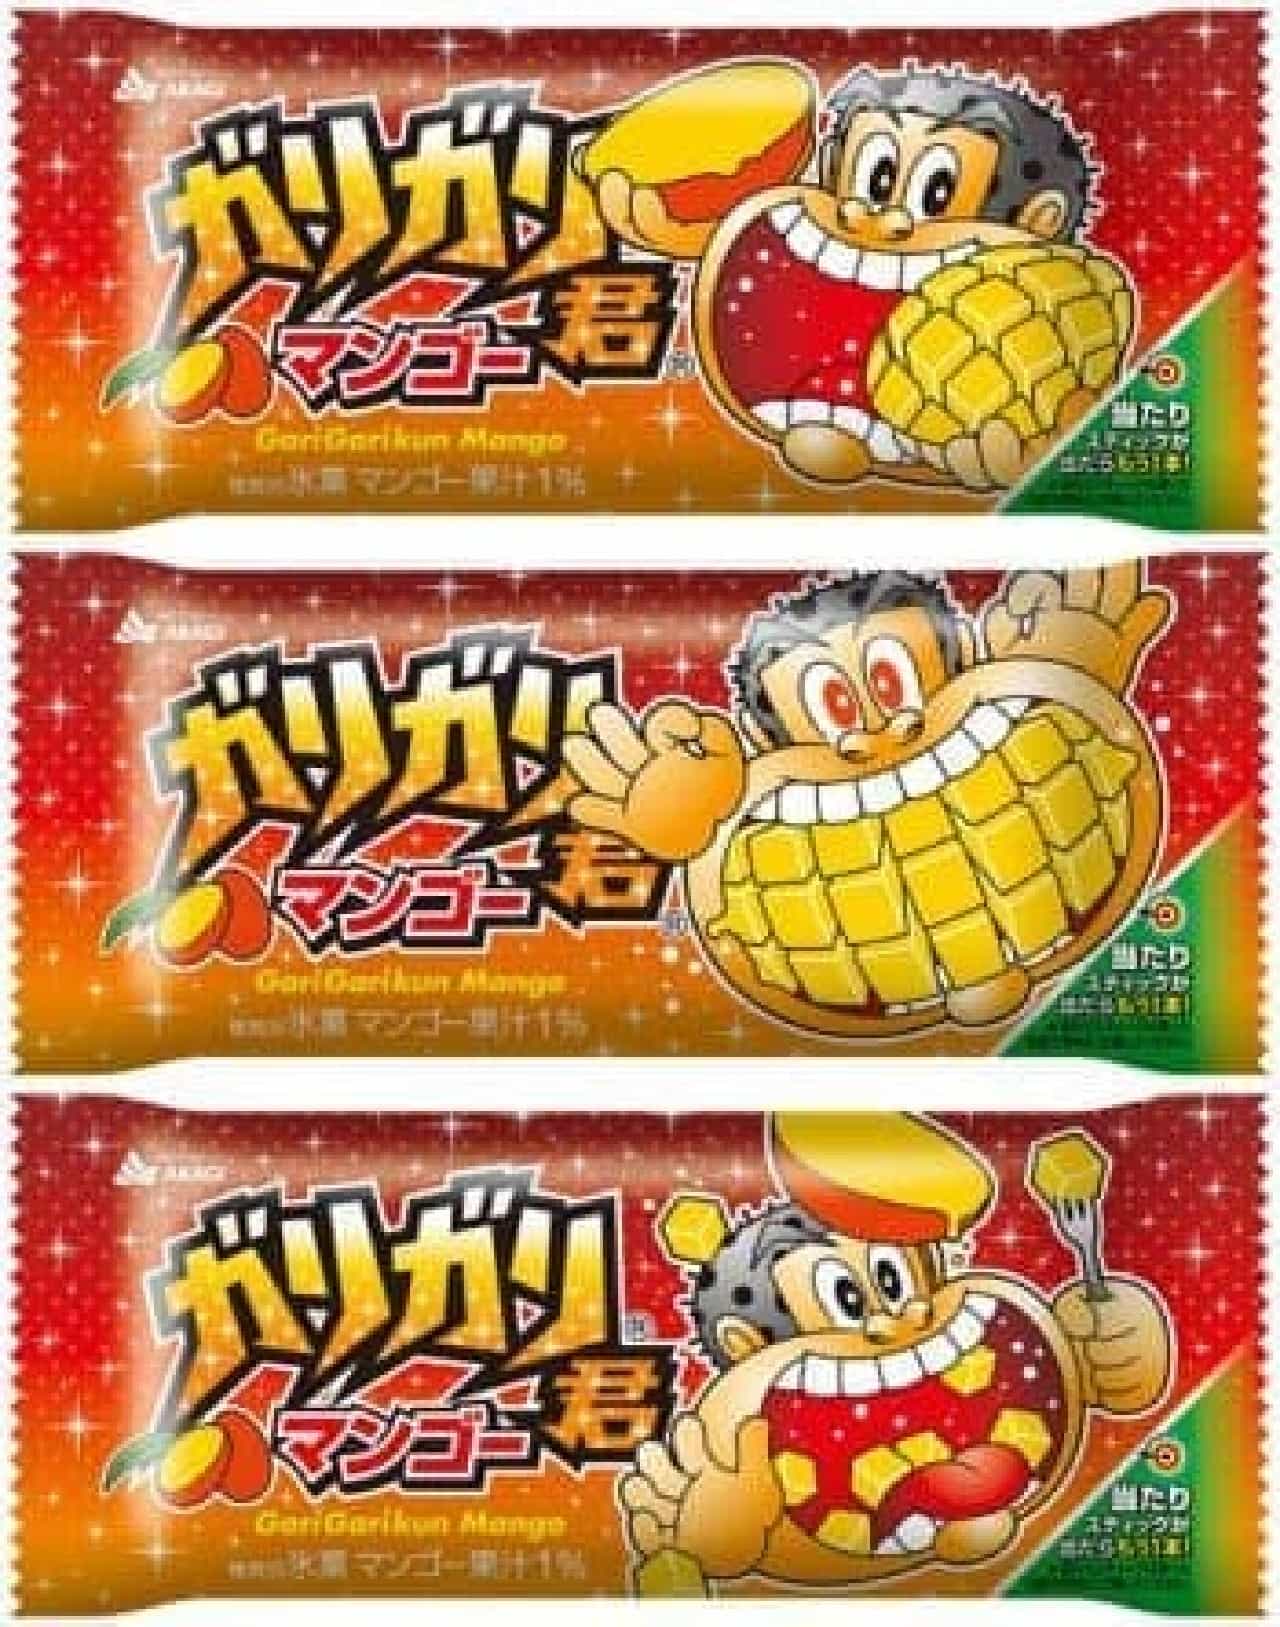 The blockbuster flavor is back! Gari-gari-kun mango